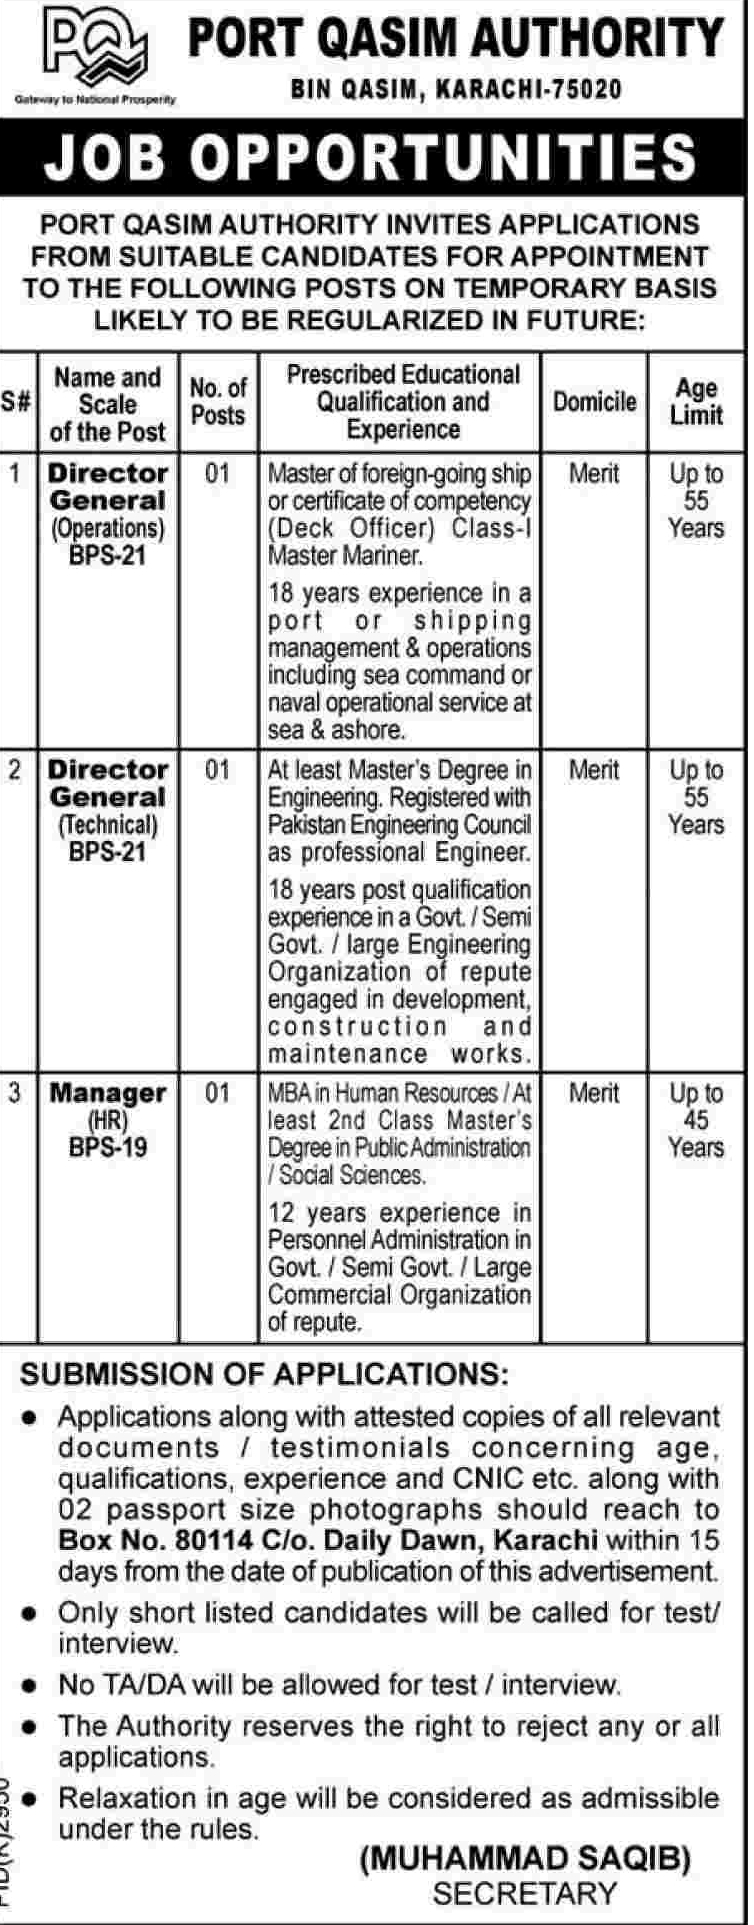 Top Management Jobs at Port Qasim Authority